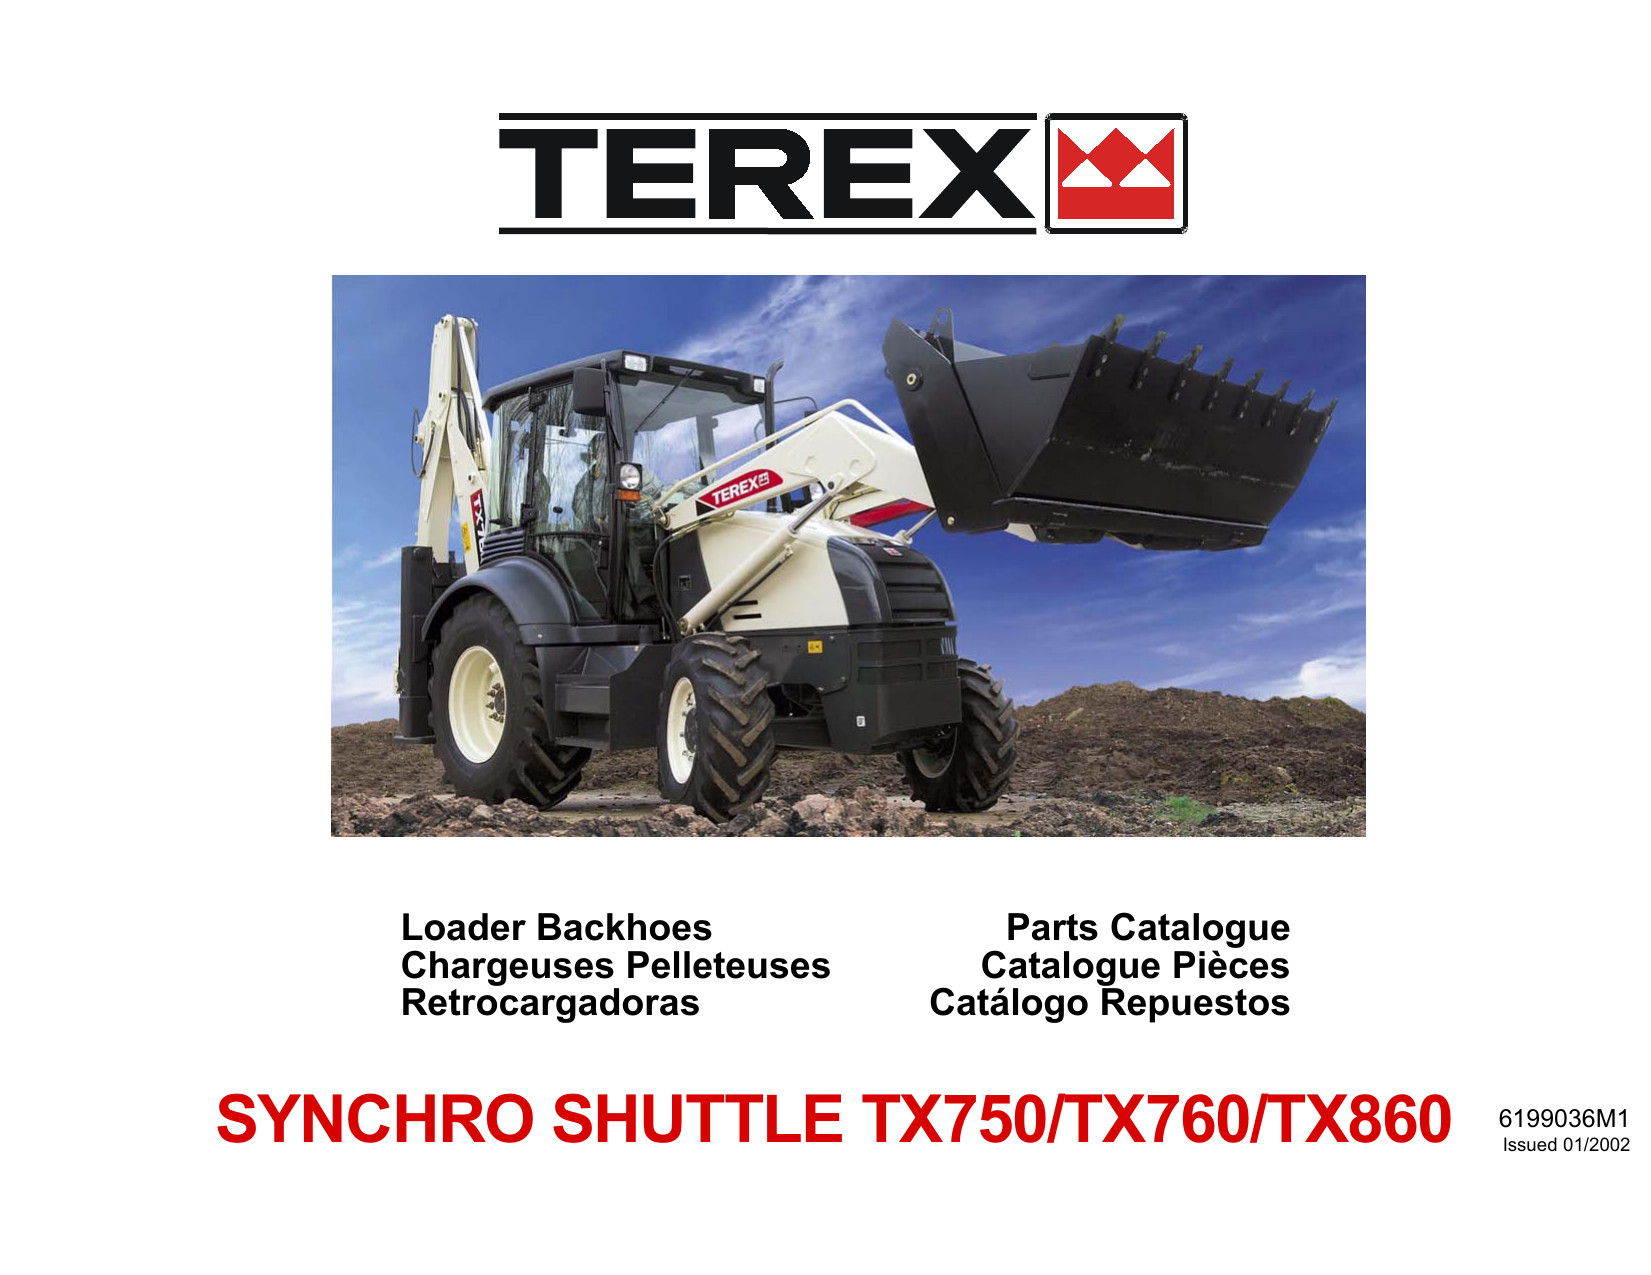 Terex TX750, TX760, TX860 Fermec loader backhoes parts catalog Preview image 2